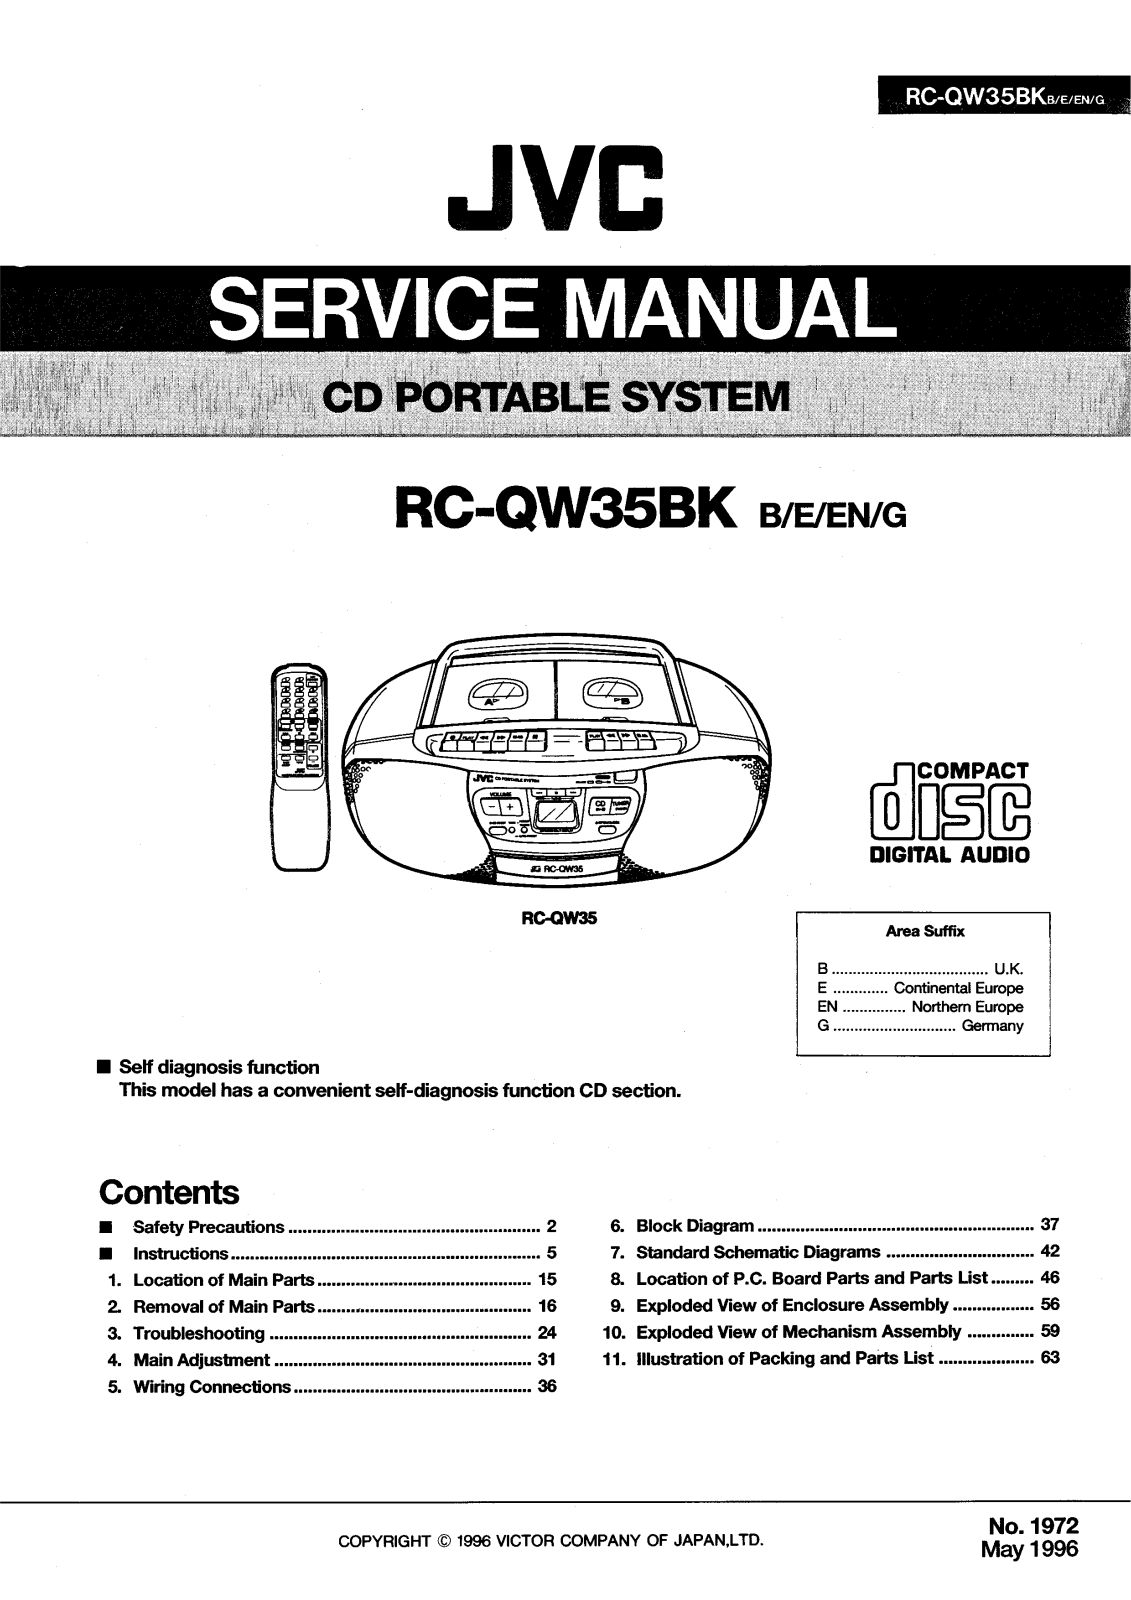 Jvc RC-QW35-BK Service Manual